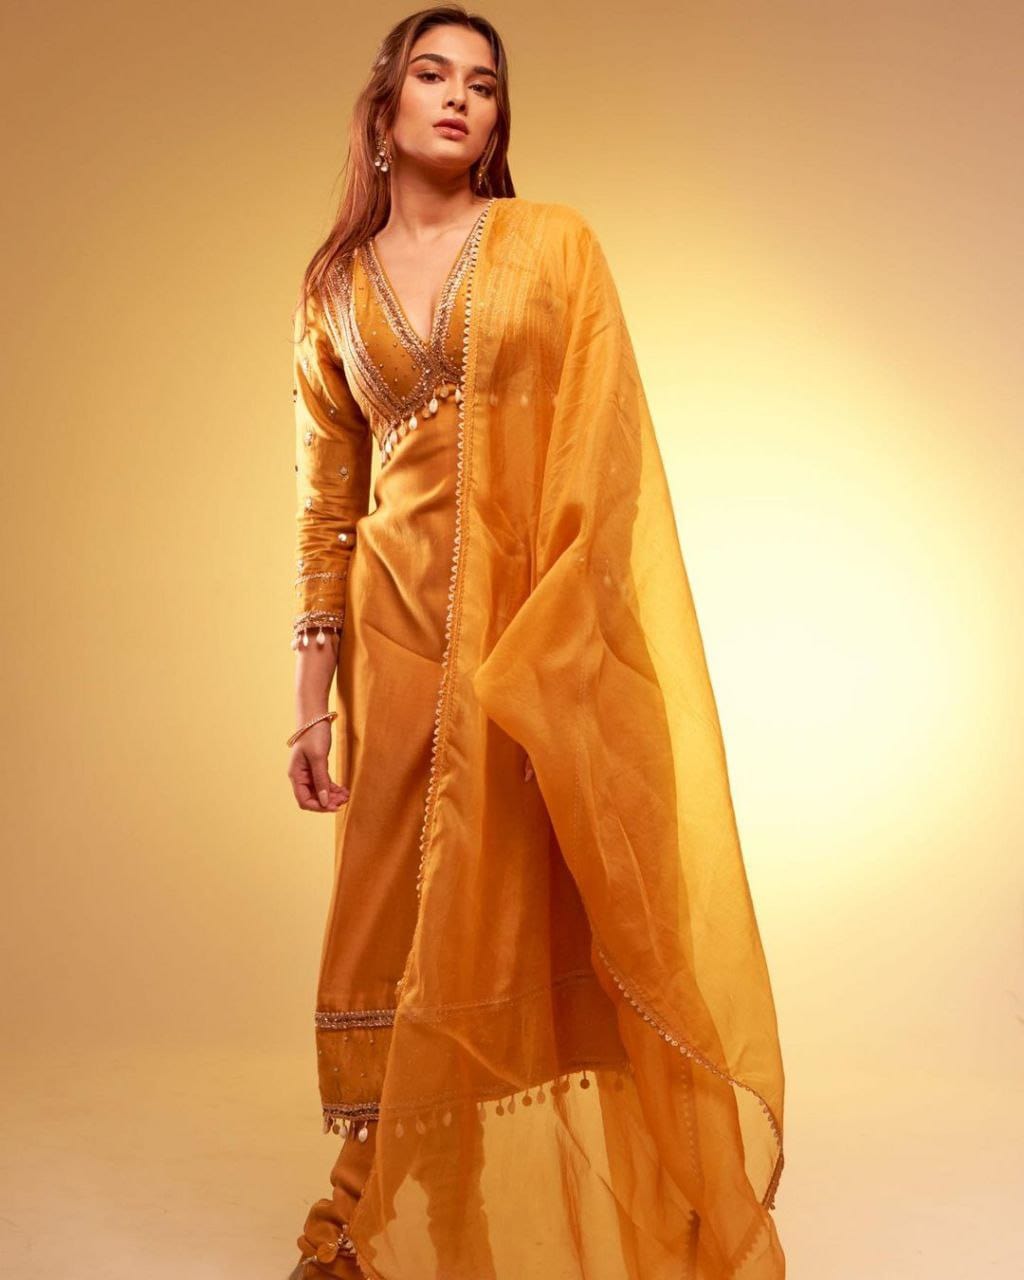 LG Designer Outfit Bollywood Style Star Saiee Manjarekar Yellow Attire